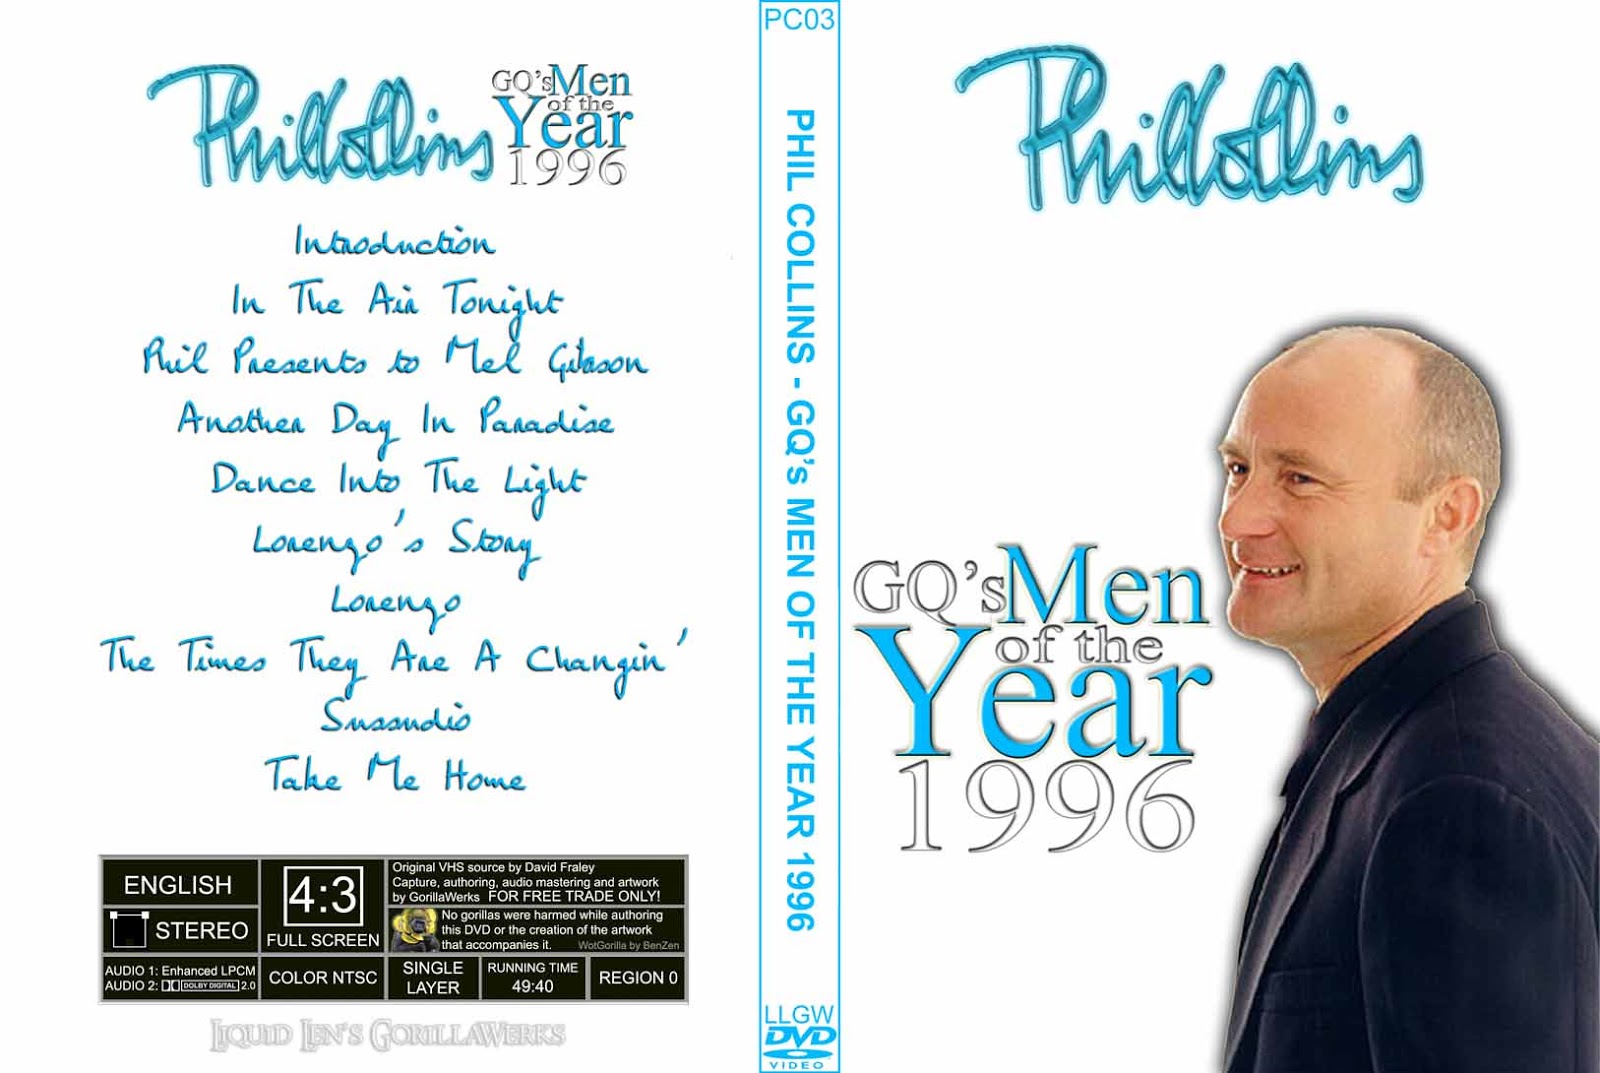 http://1.bp.blogspot.com/-Cd7zV0-U8nA/T7bfrucjwNI/AAAAAAAAF-8/kG30Yw9JeZ8/s1600/DVD+Cover+-+Phil+Collins+-+GQ%27s+Men+Of+The+Year+1996.jpg